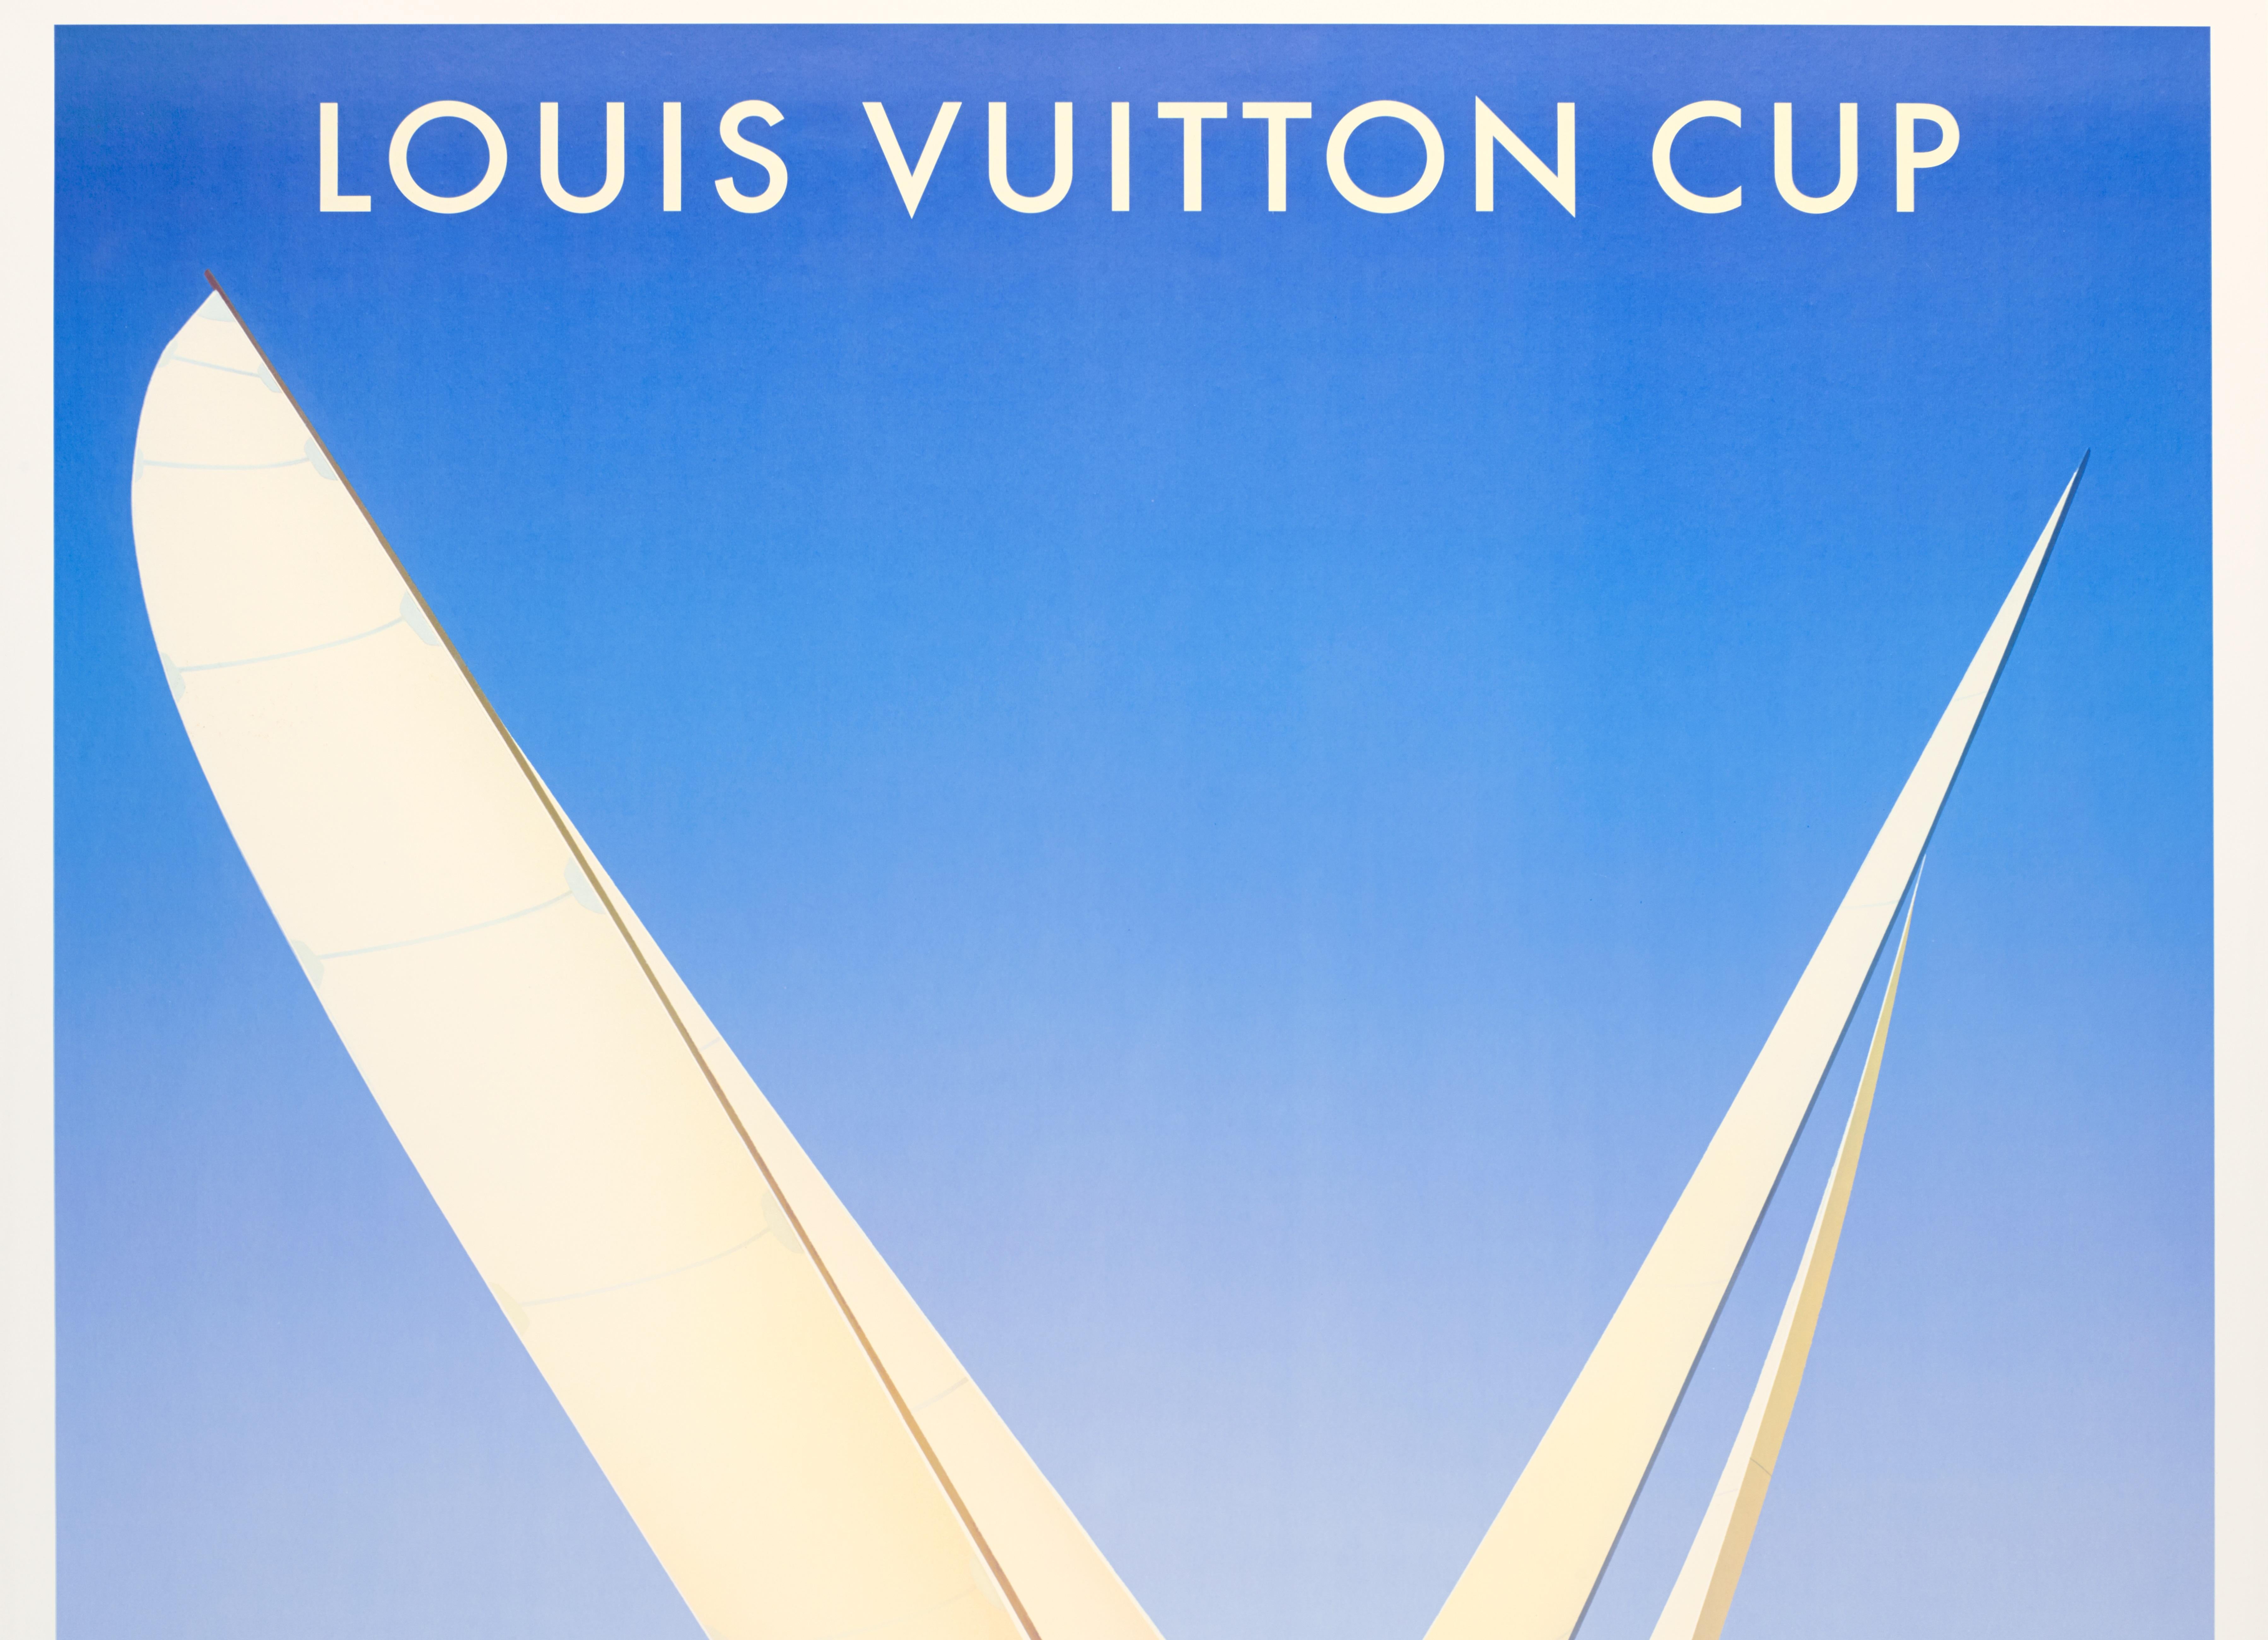 Razzia, Original Louis Vuitton Boat Poster,Auckland, New Zealand, Sailing Ship, 2002

Artist: Razzia
Title: Louis Vuitton Cup – New Zealand – October 2002 – January 2003
Date: 2002
Size (w x h): 48 x 60,2 in / 122 x 153 cm
Materials and Techniques: